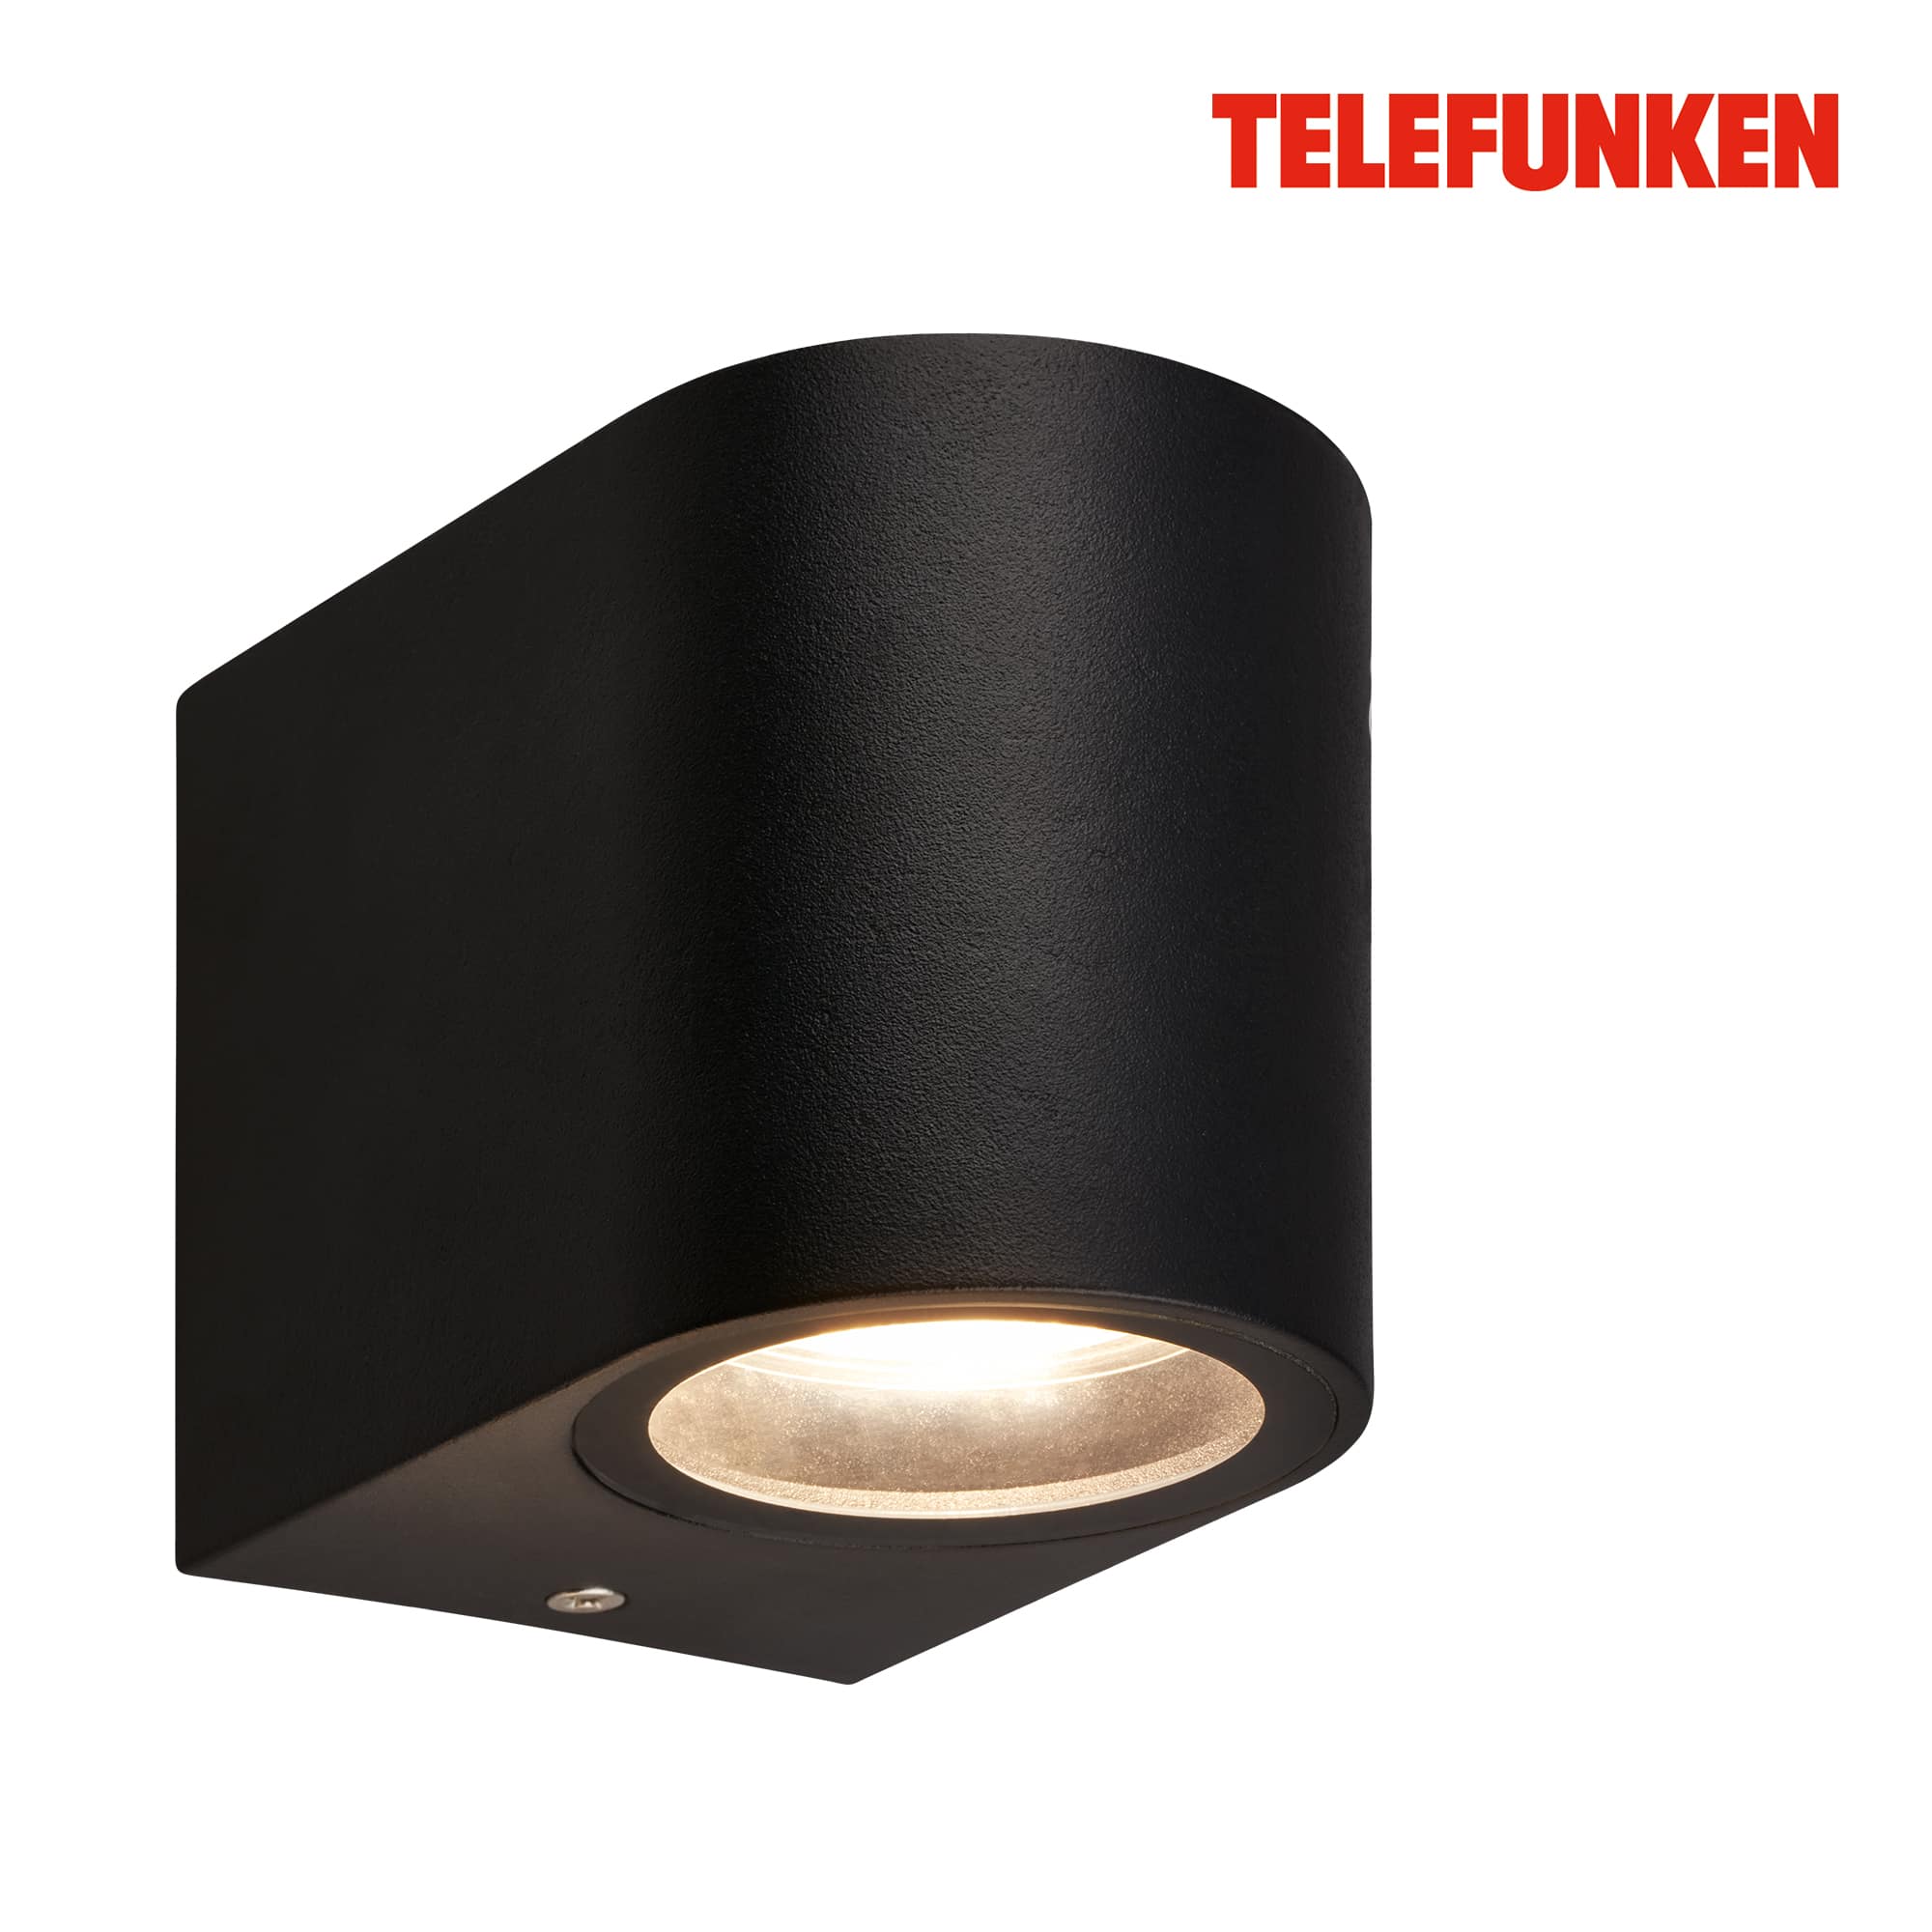 Telefunken LED wall light, splash-proof, on/off via wall switch